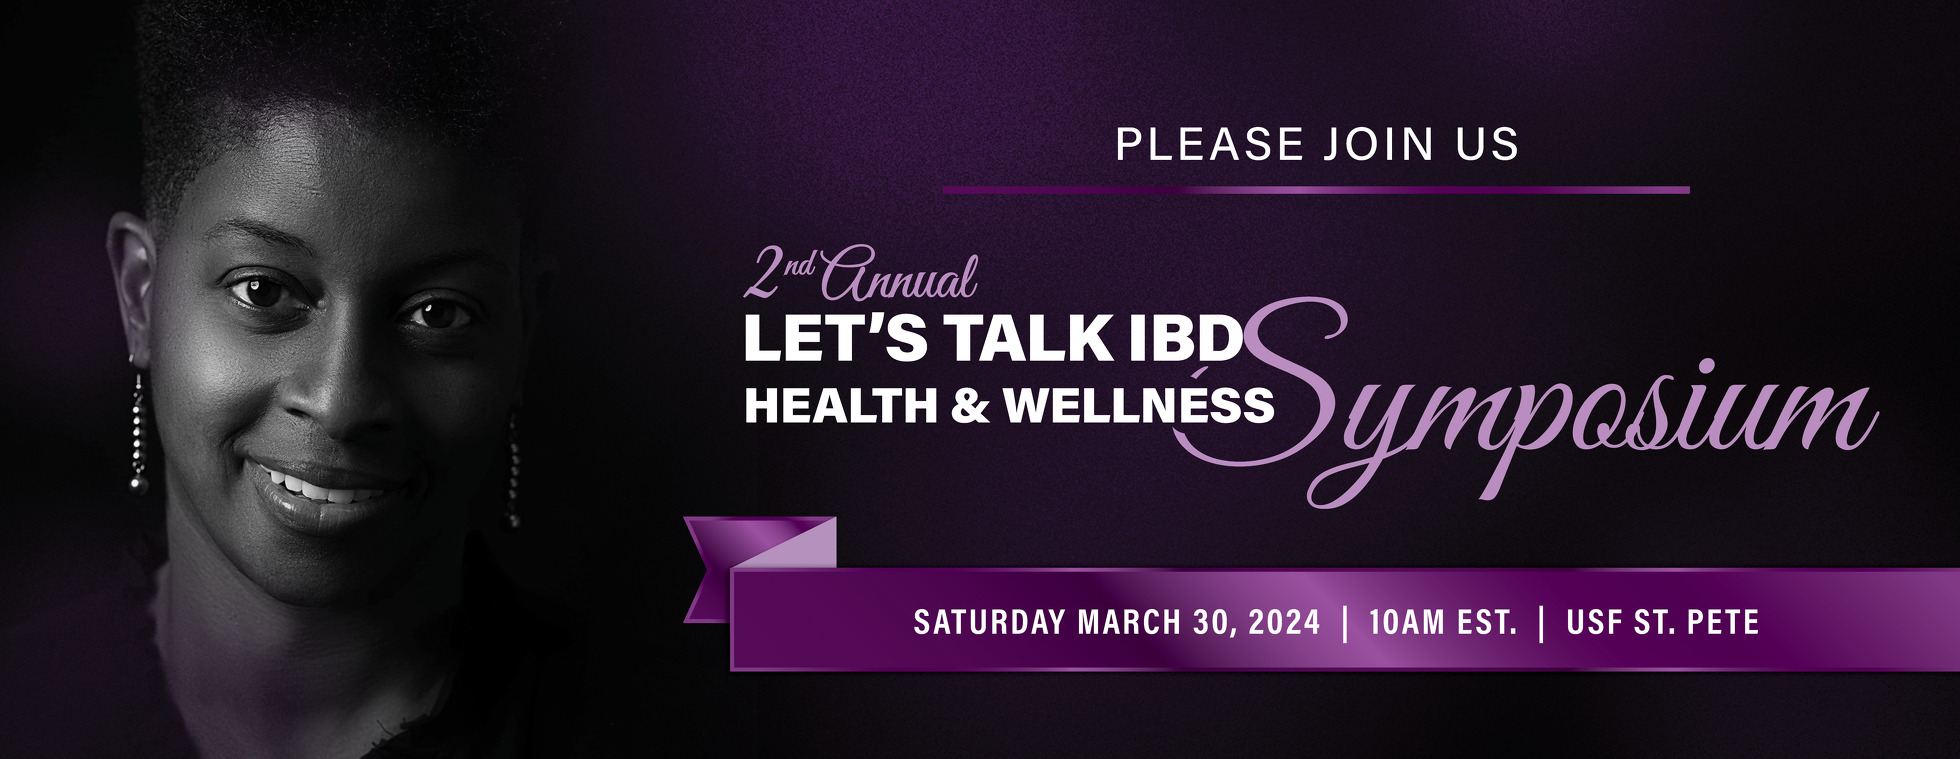 Let's Talk Inflammatory Bowel Disease (IBD) Health & Wellness Symposium 